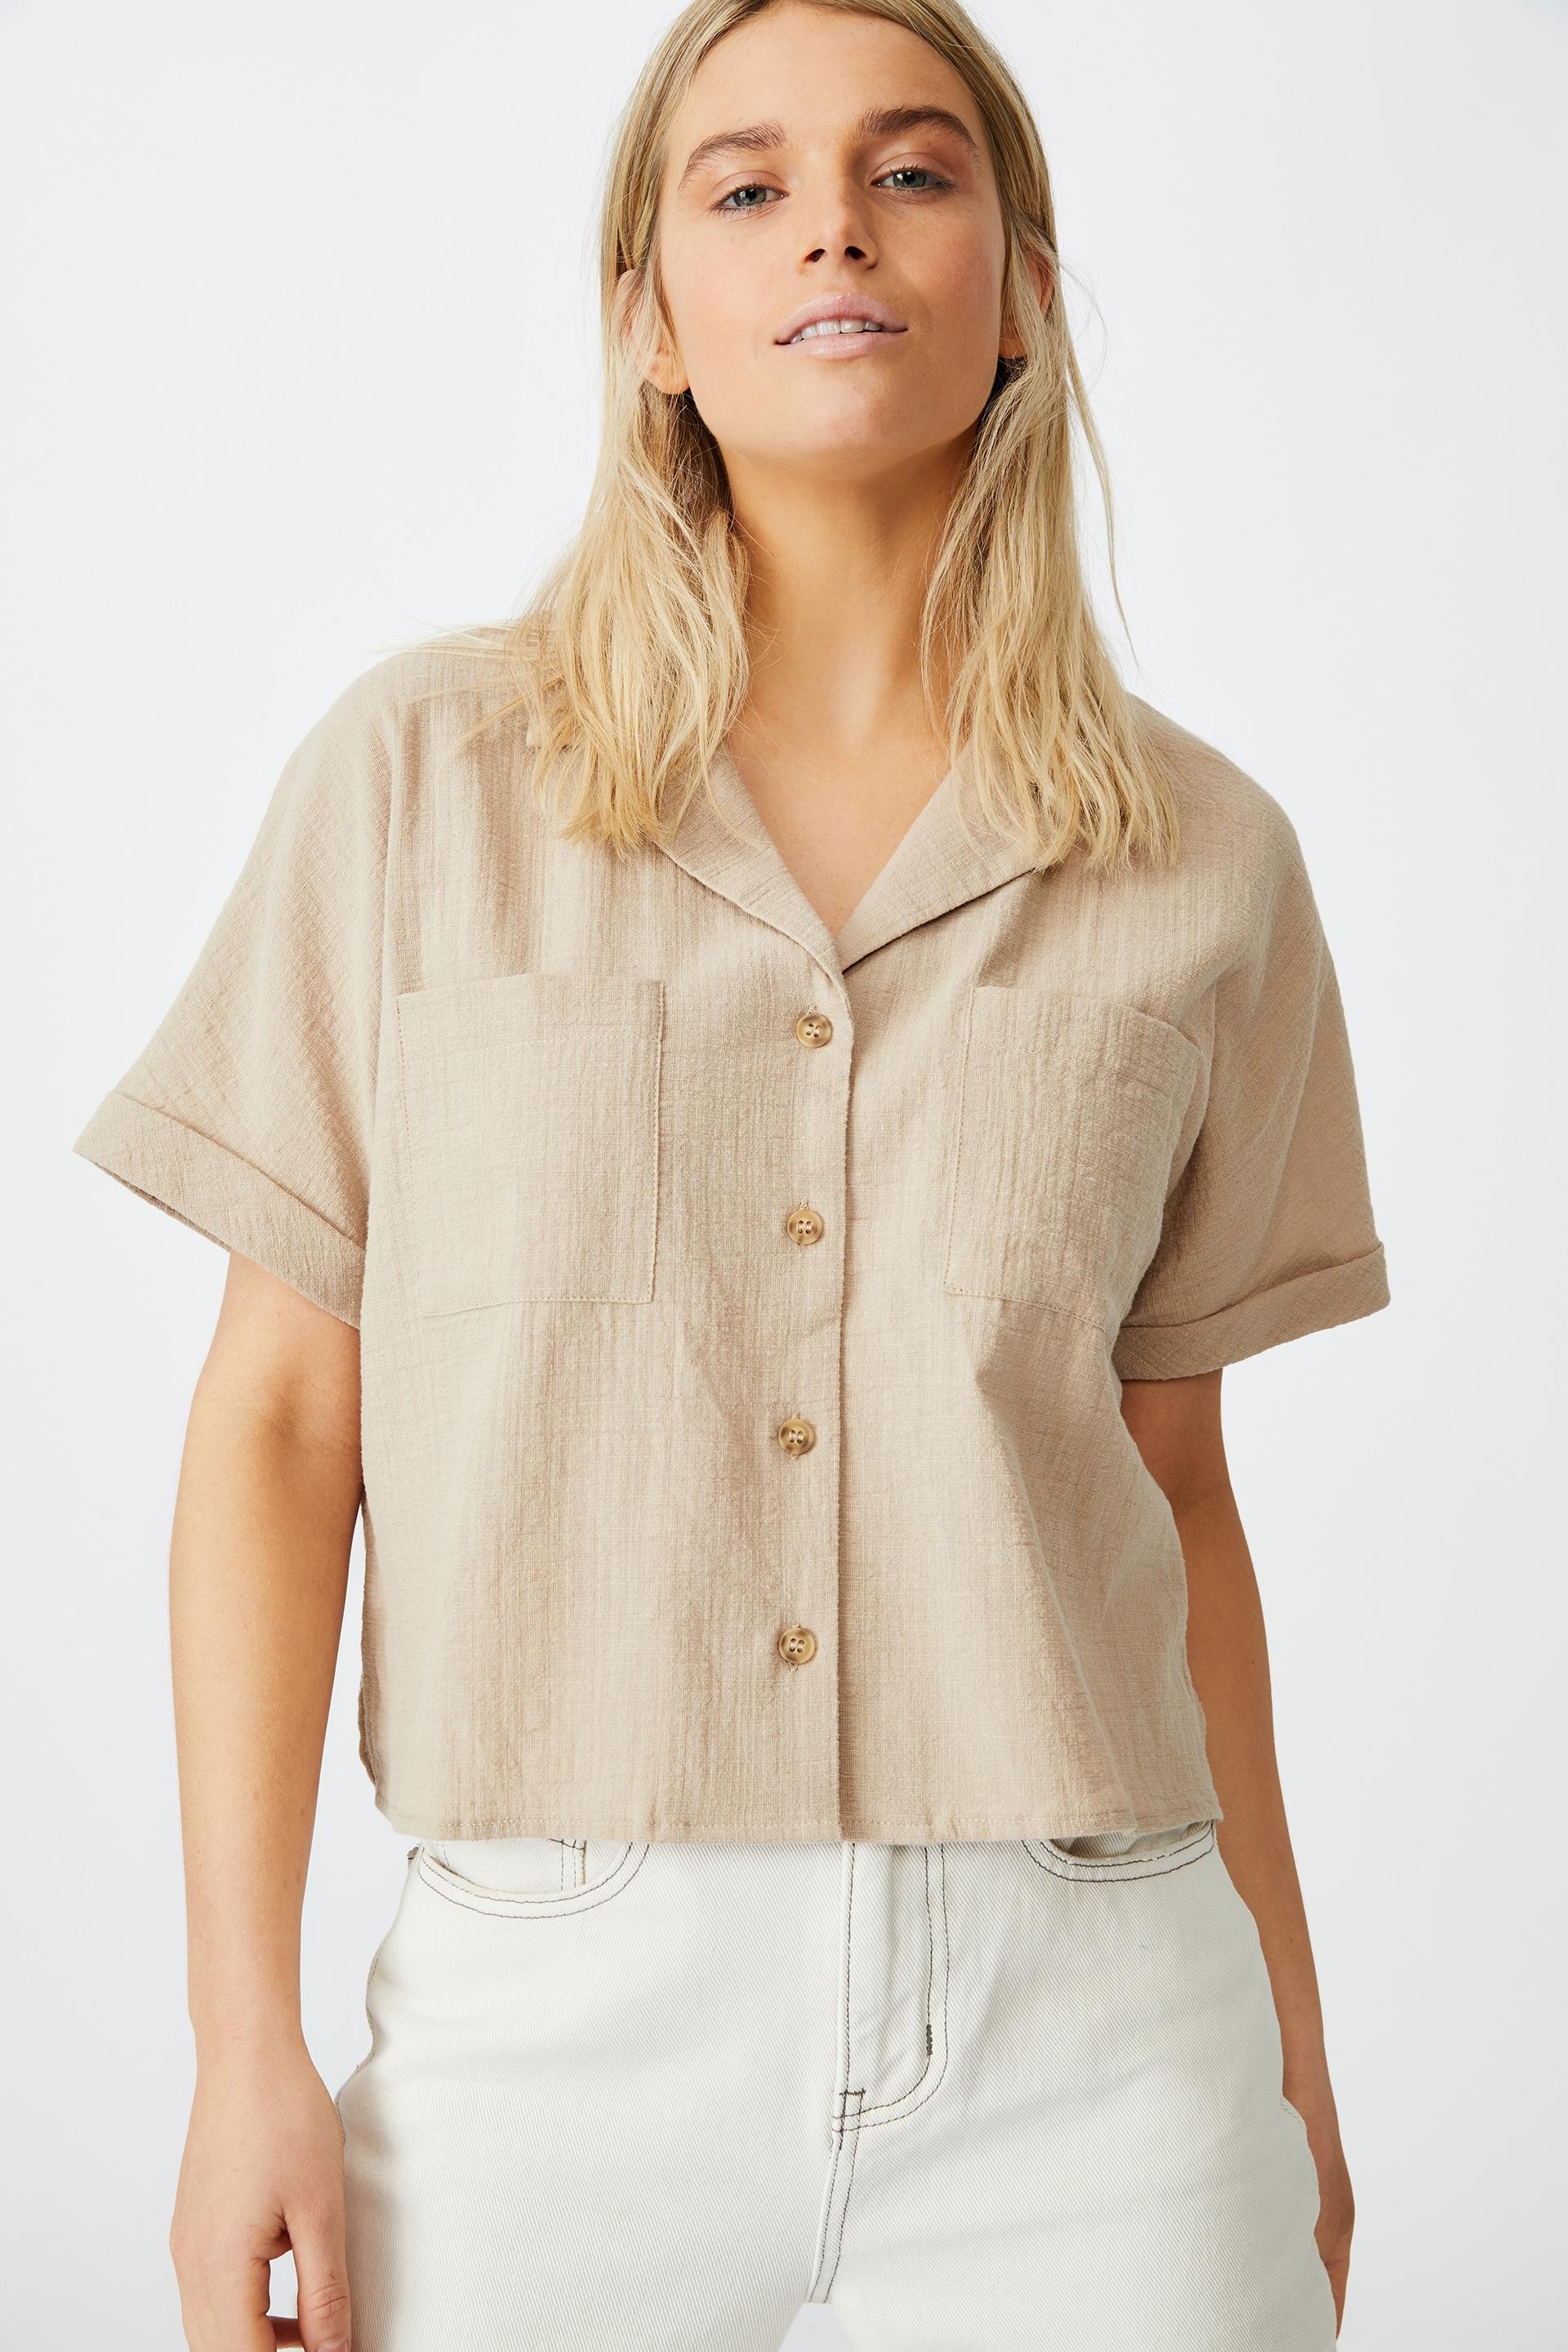 Erika short sleeve shirt - flax grey Cotton On Shirts | Superbalist.com